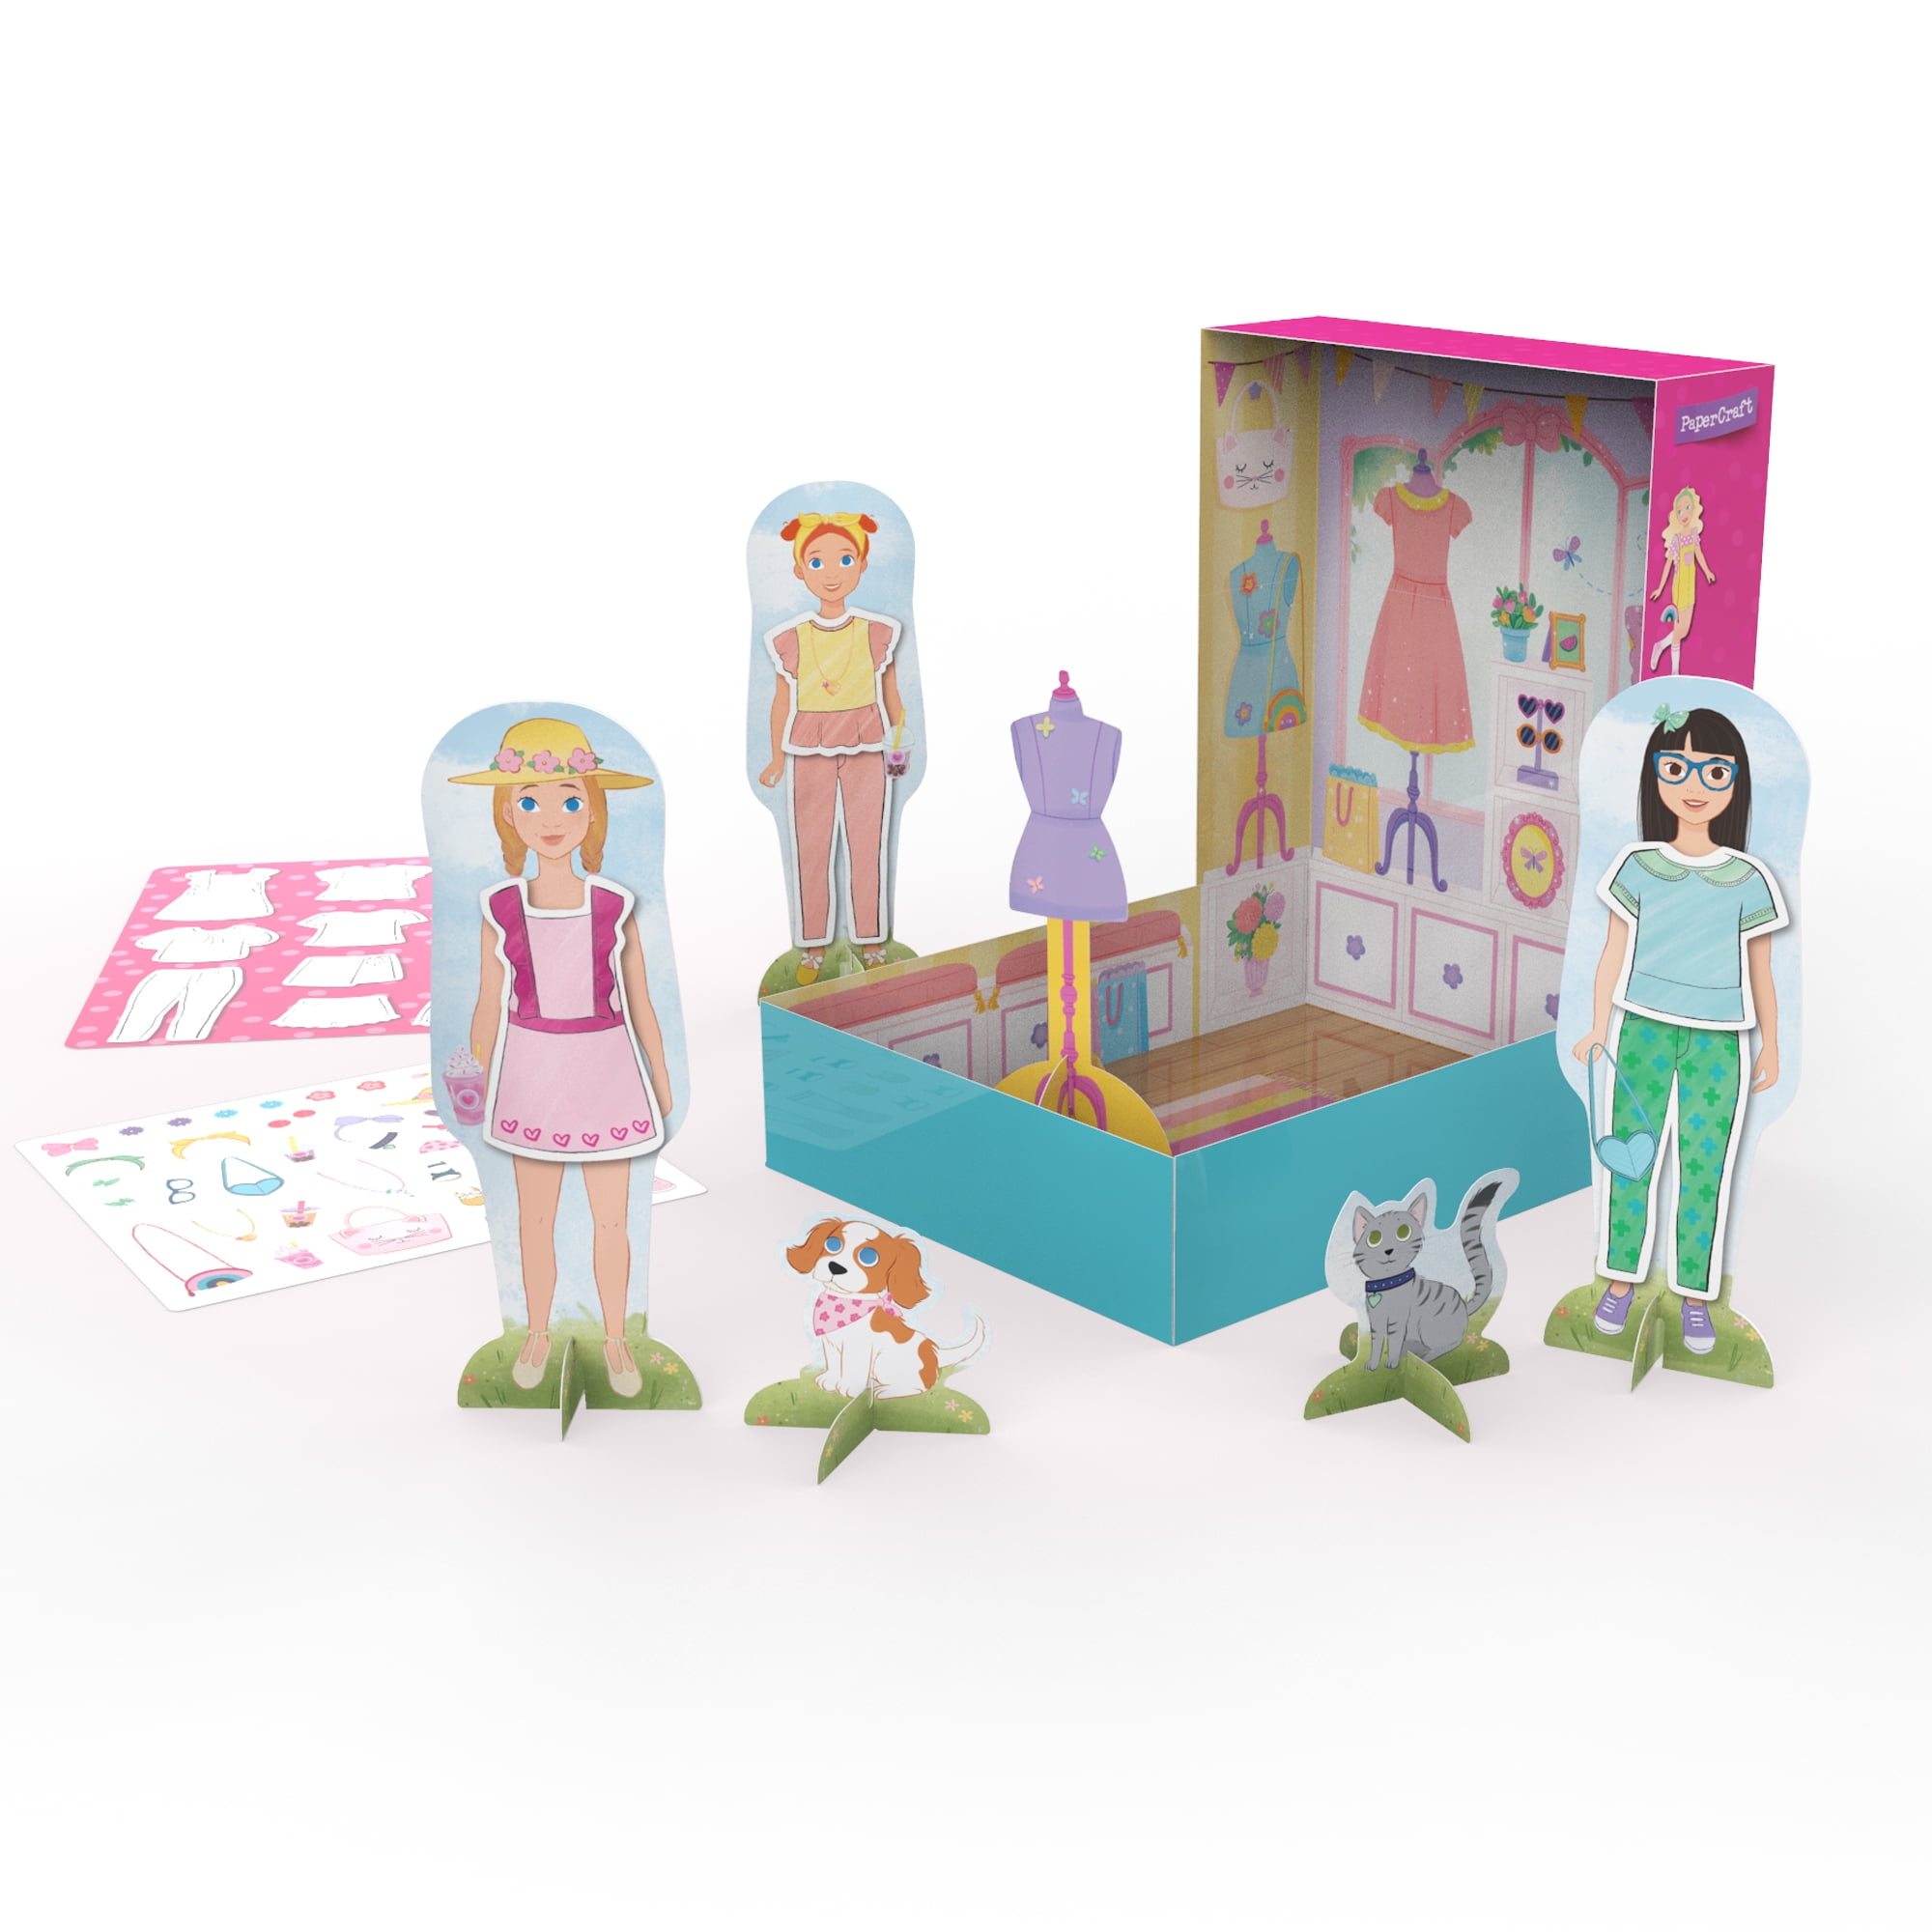 Wayward Girls' Crafts: Magnetic Paper Dolls